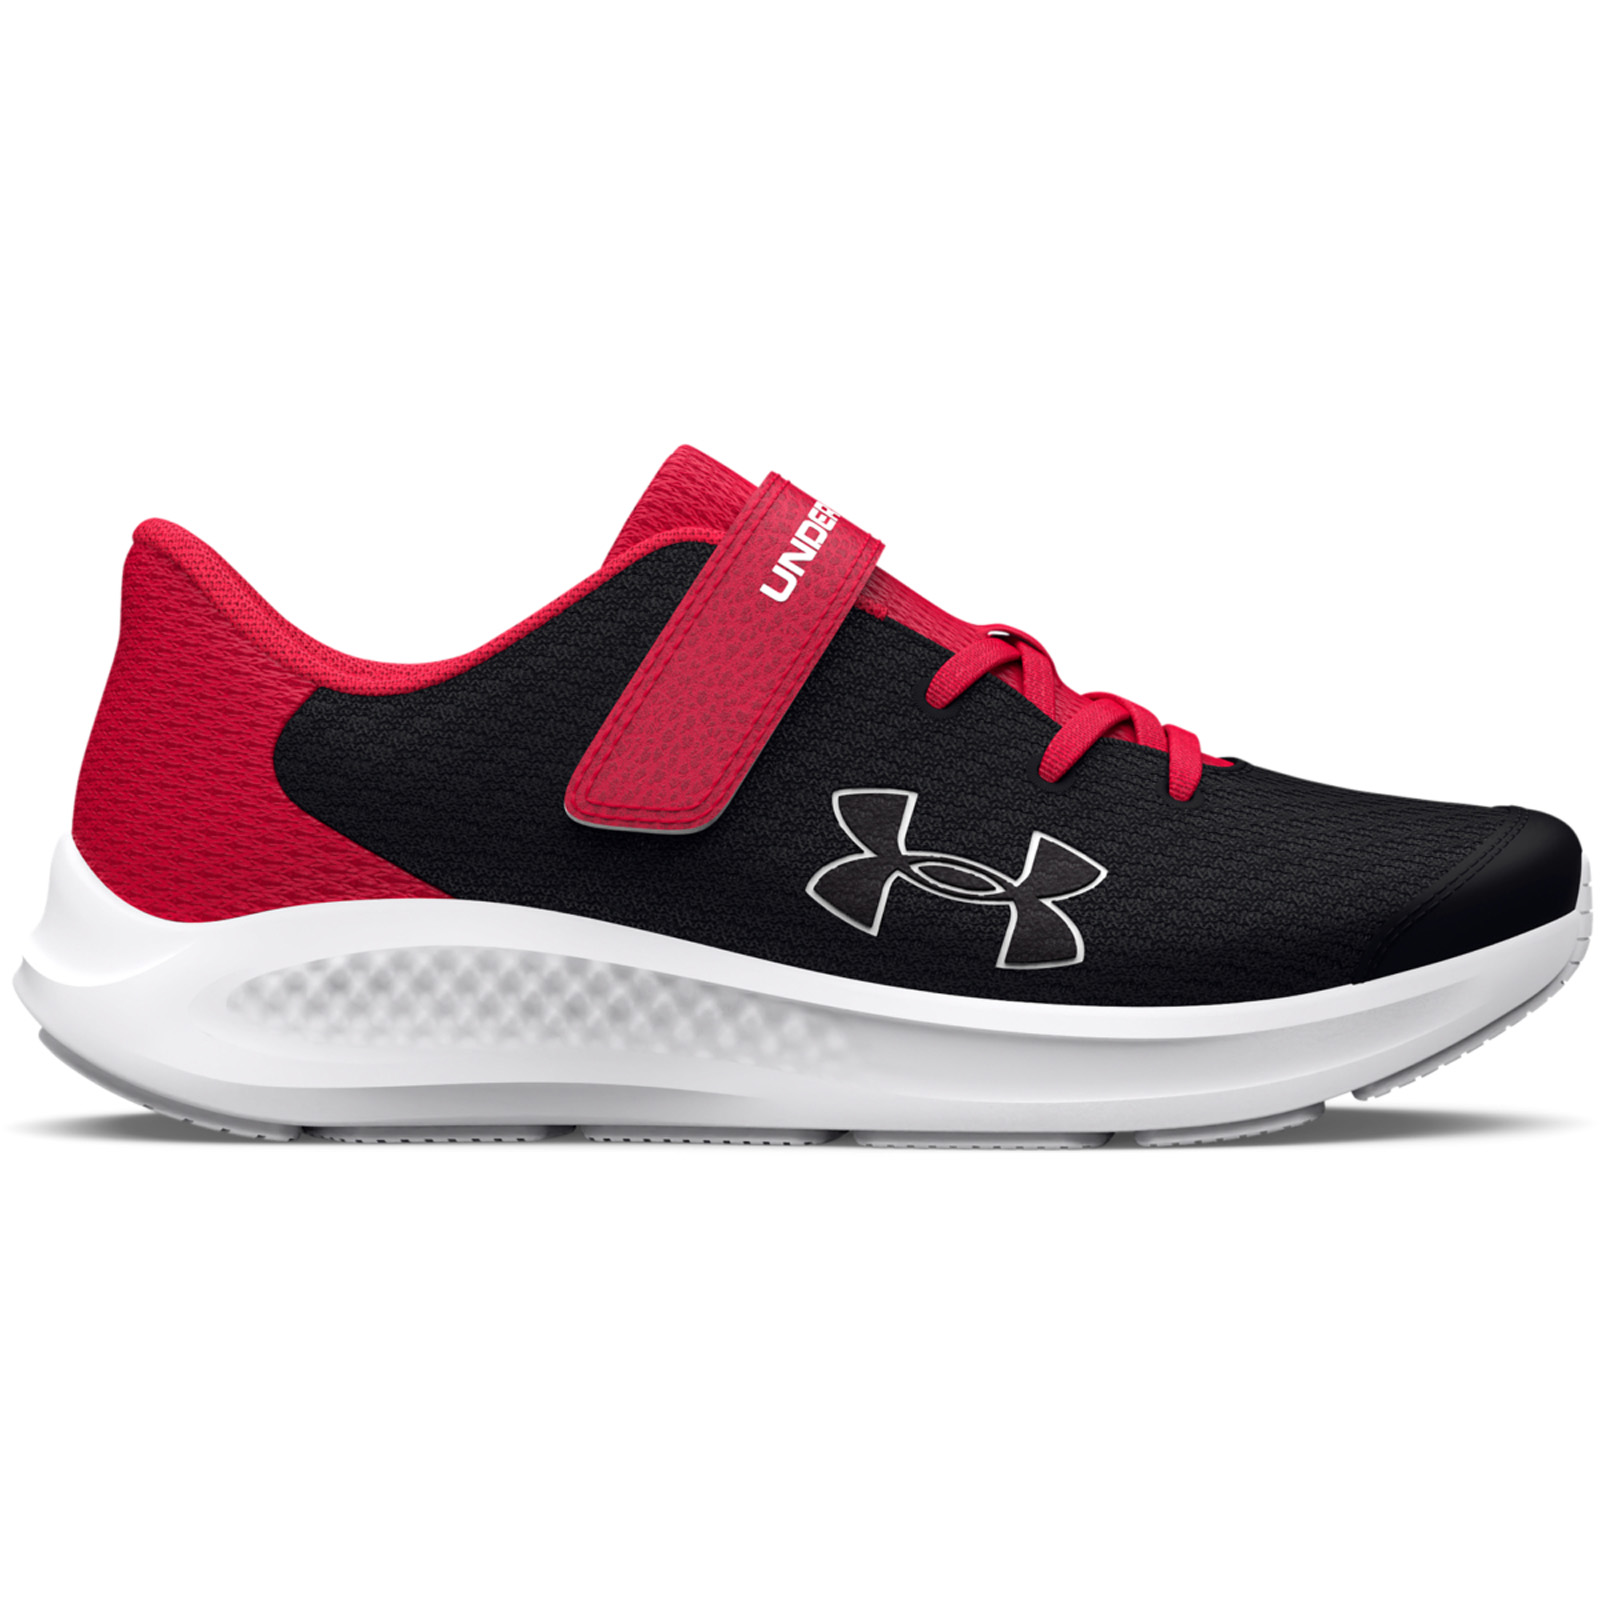 Under Armour - Boys' Pre-School UA Pursuit 3 AC Big Logo Running Shoes - Black/Red/White